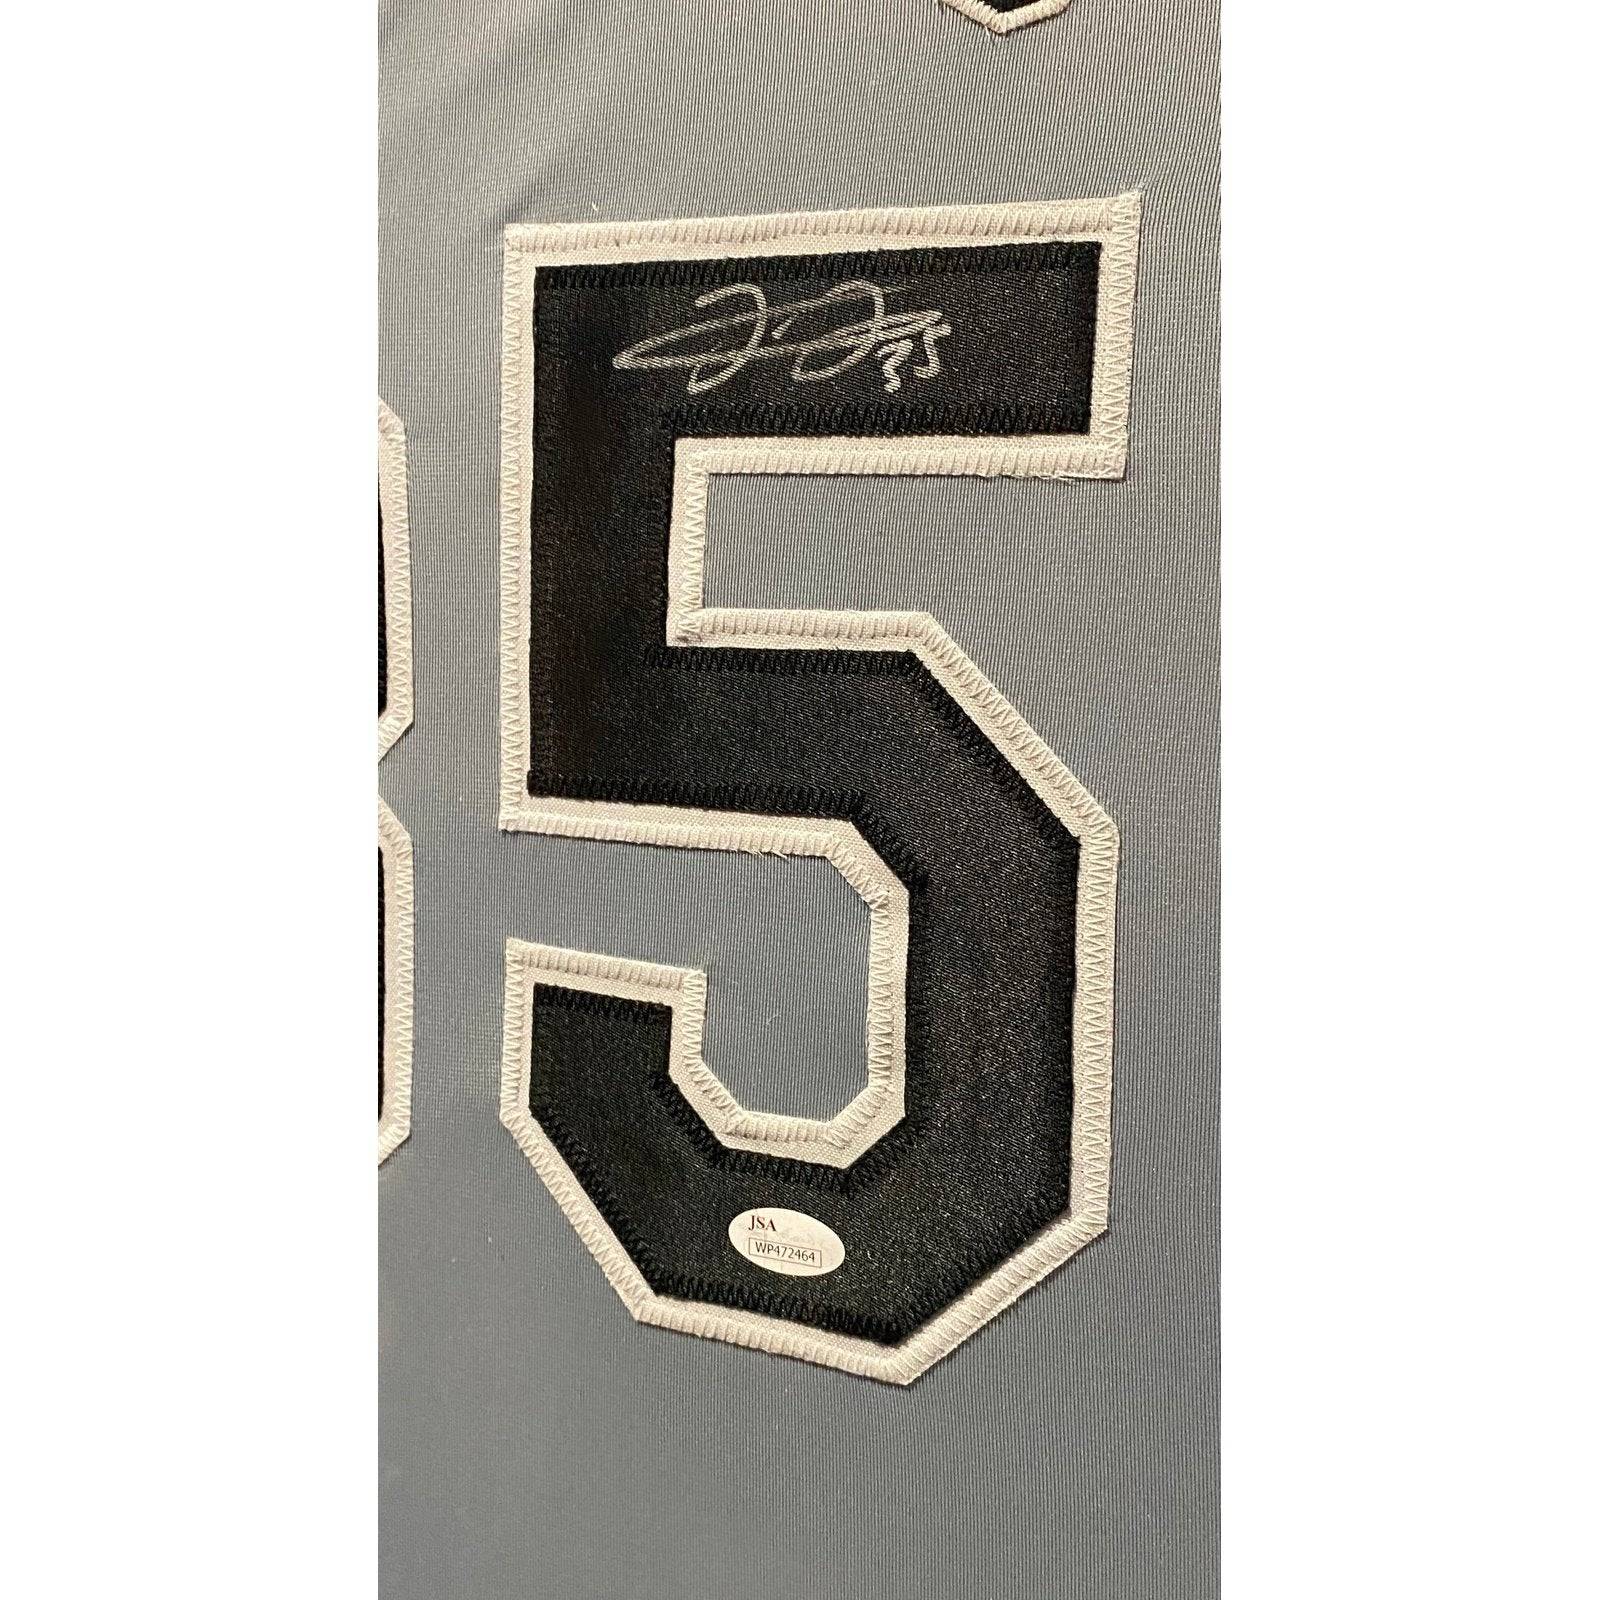 Frank Thomas Framed Jersey JSA Autographed Signed Chicago White Sox